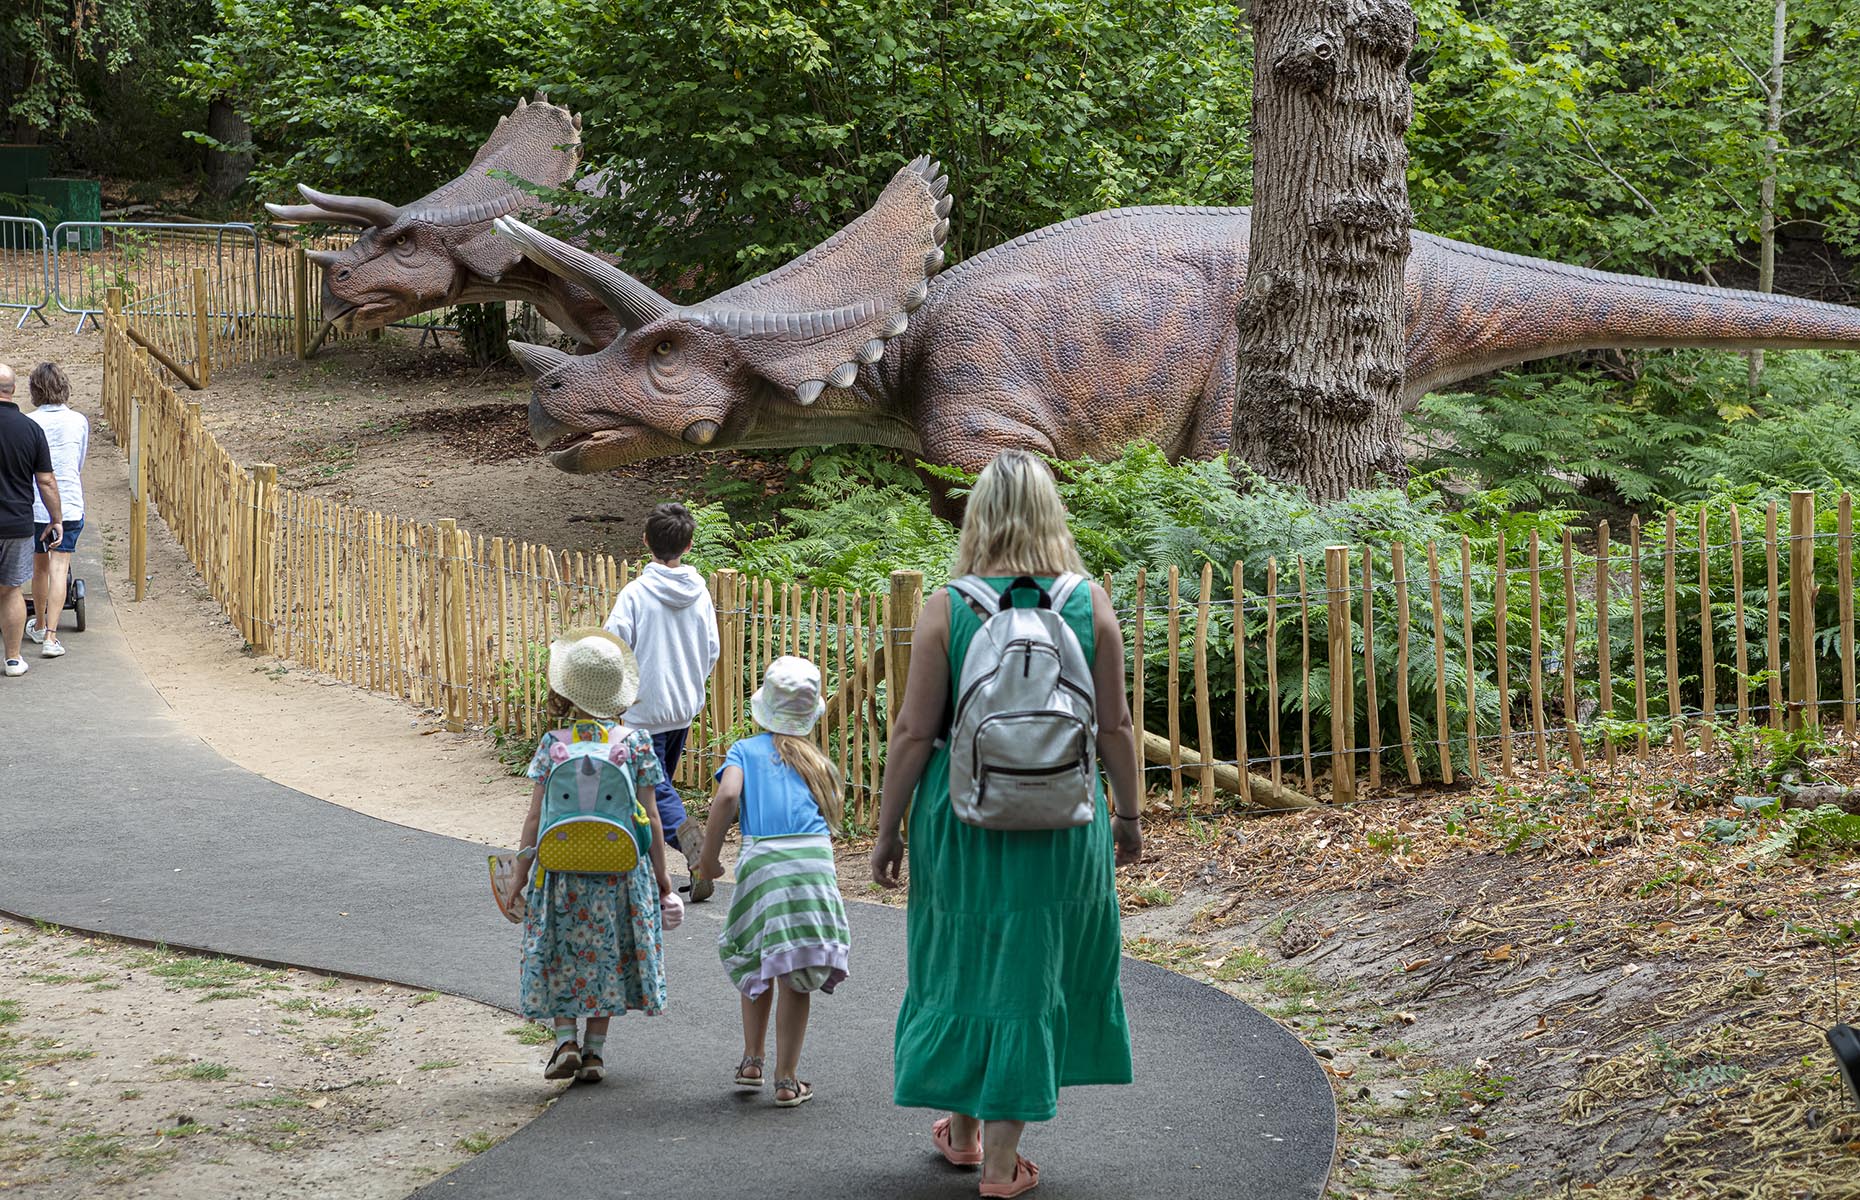 Walking amongst the dinosaurs at ROARR!(ROARR!)